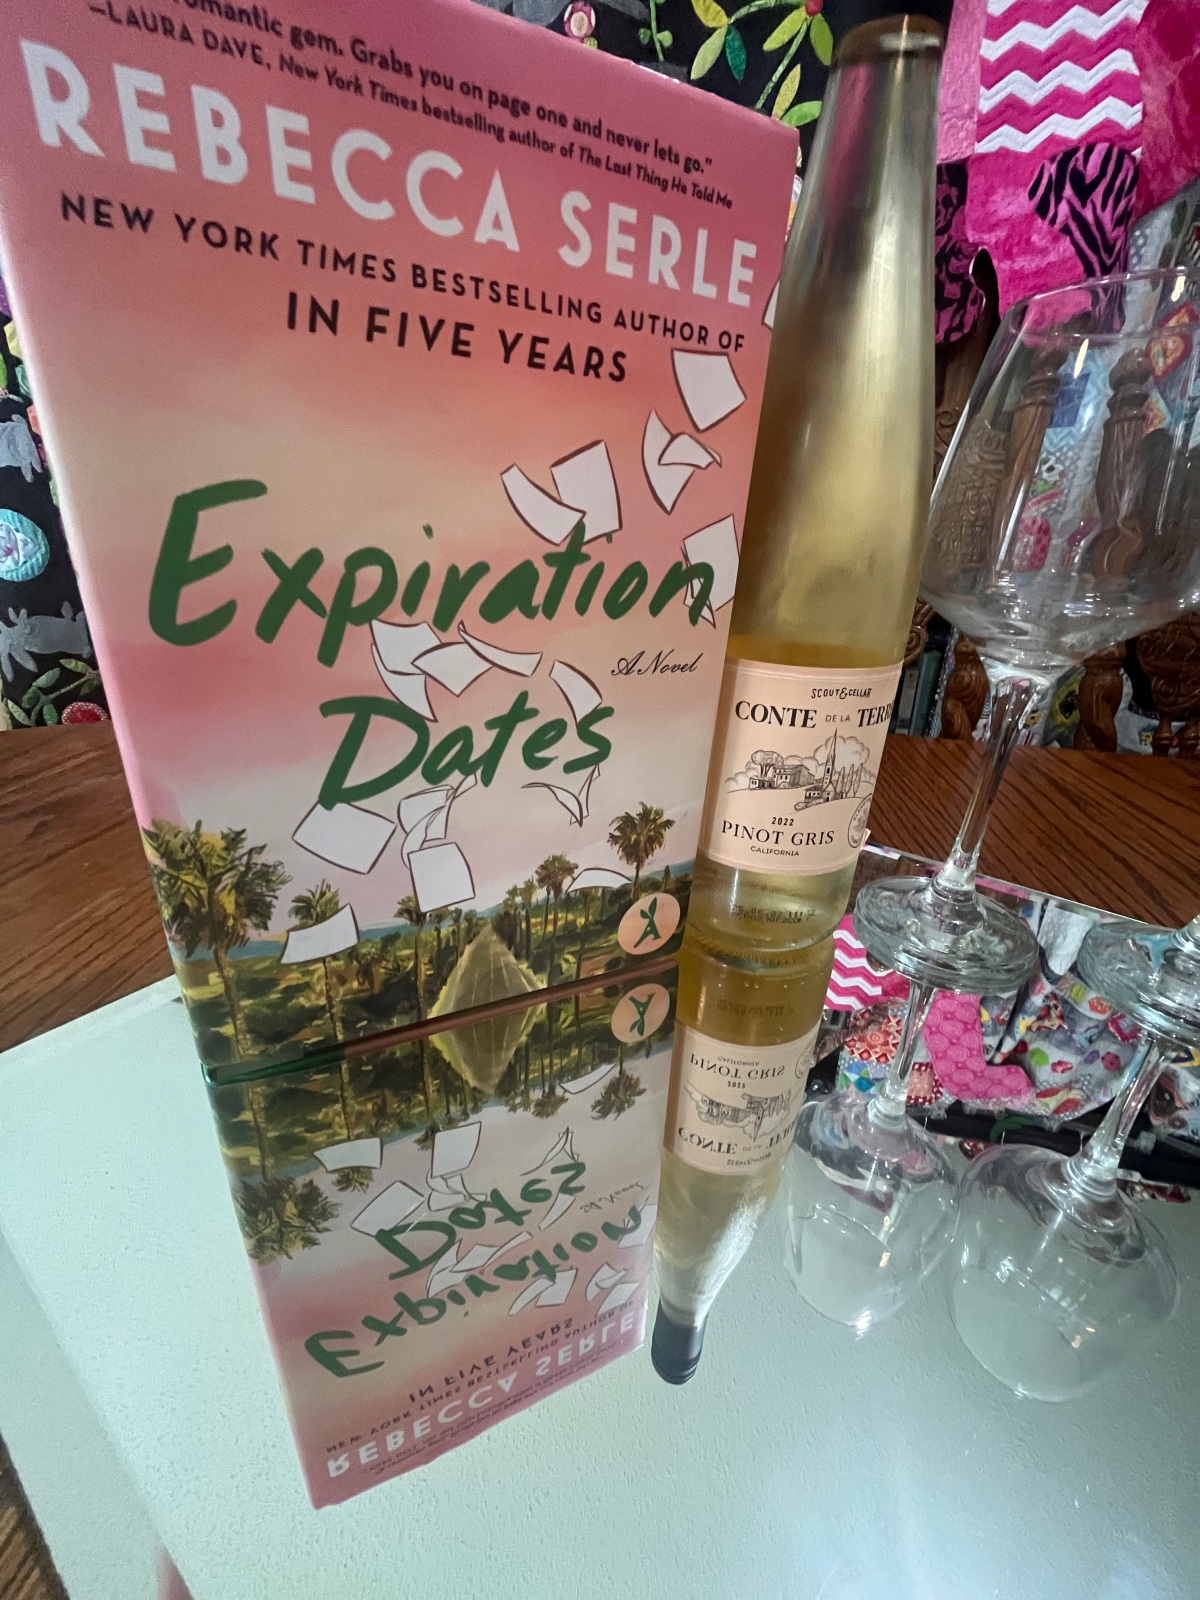 Weekly Wine: Expiration Dates